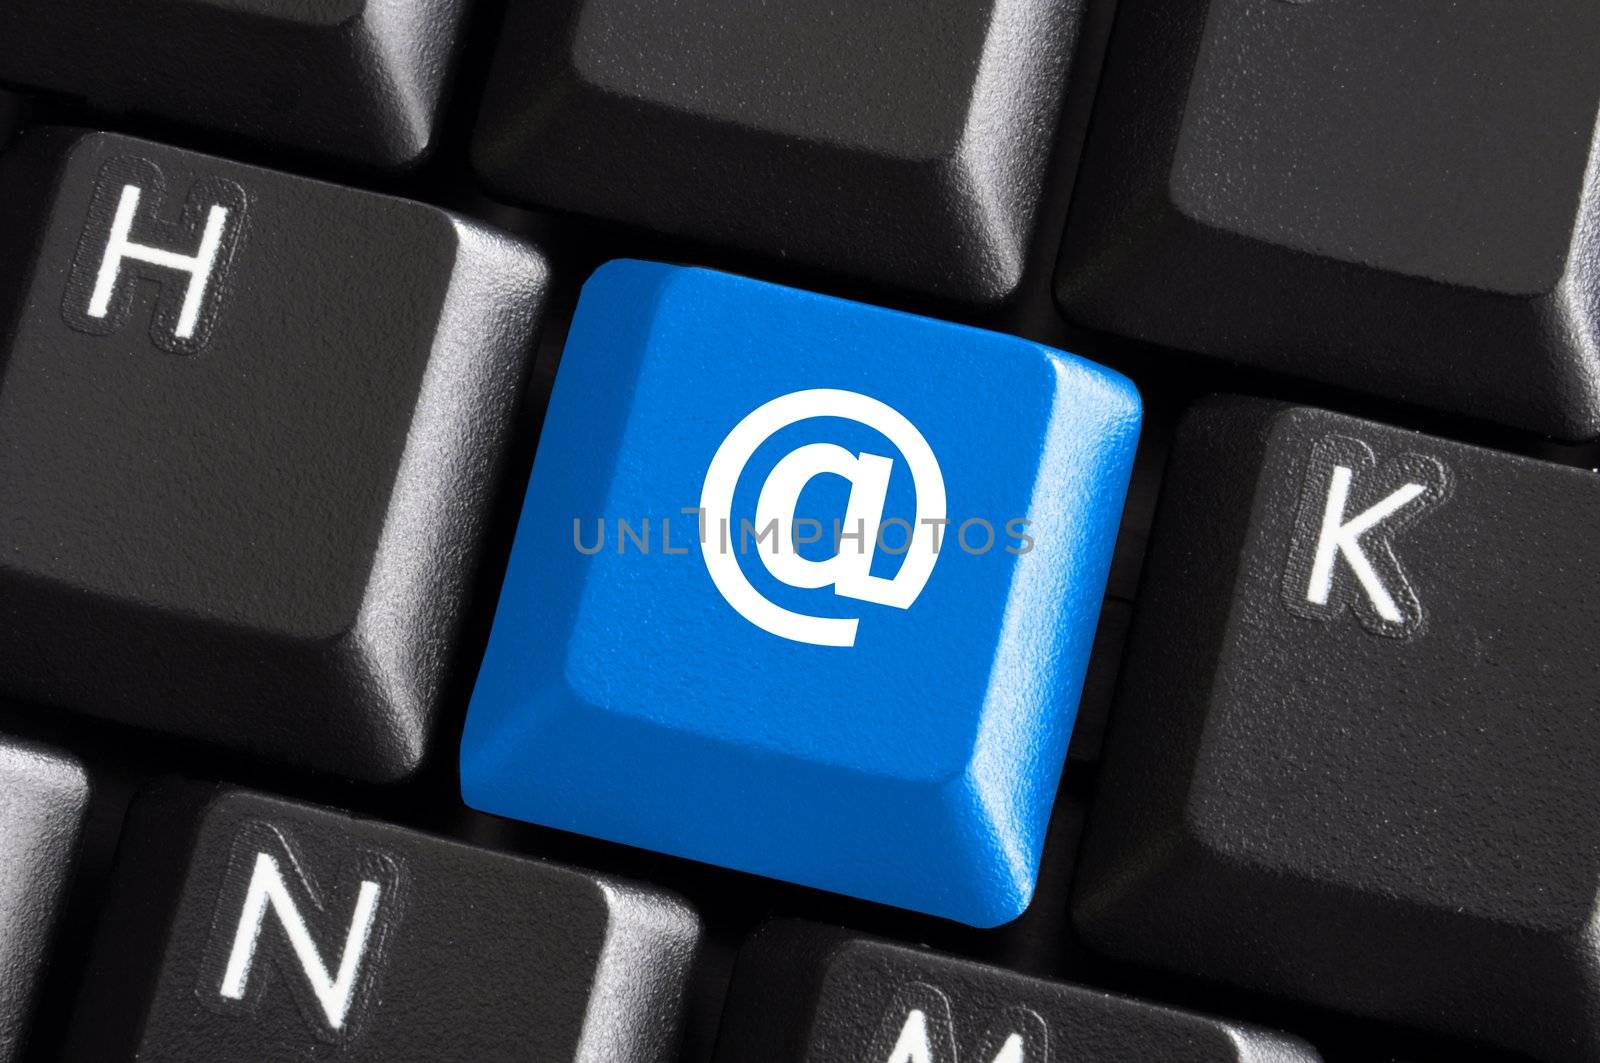 internet email communication by gunnar3000